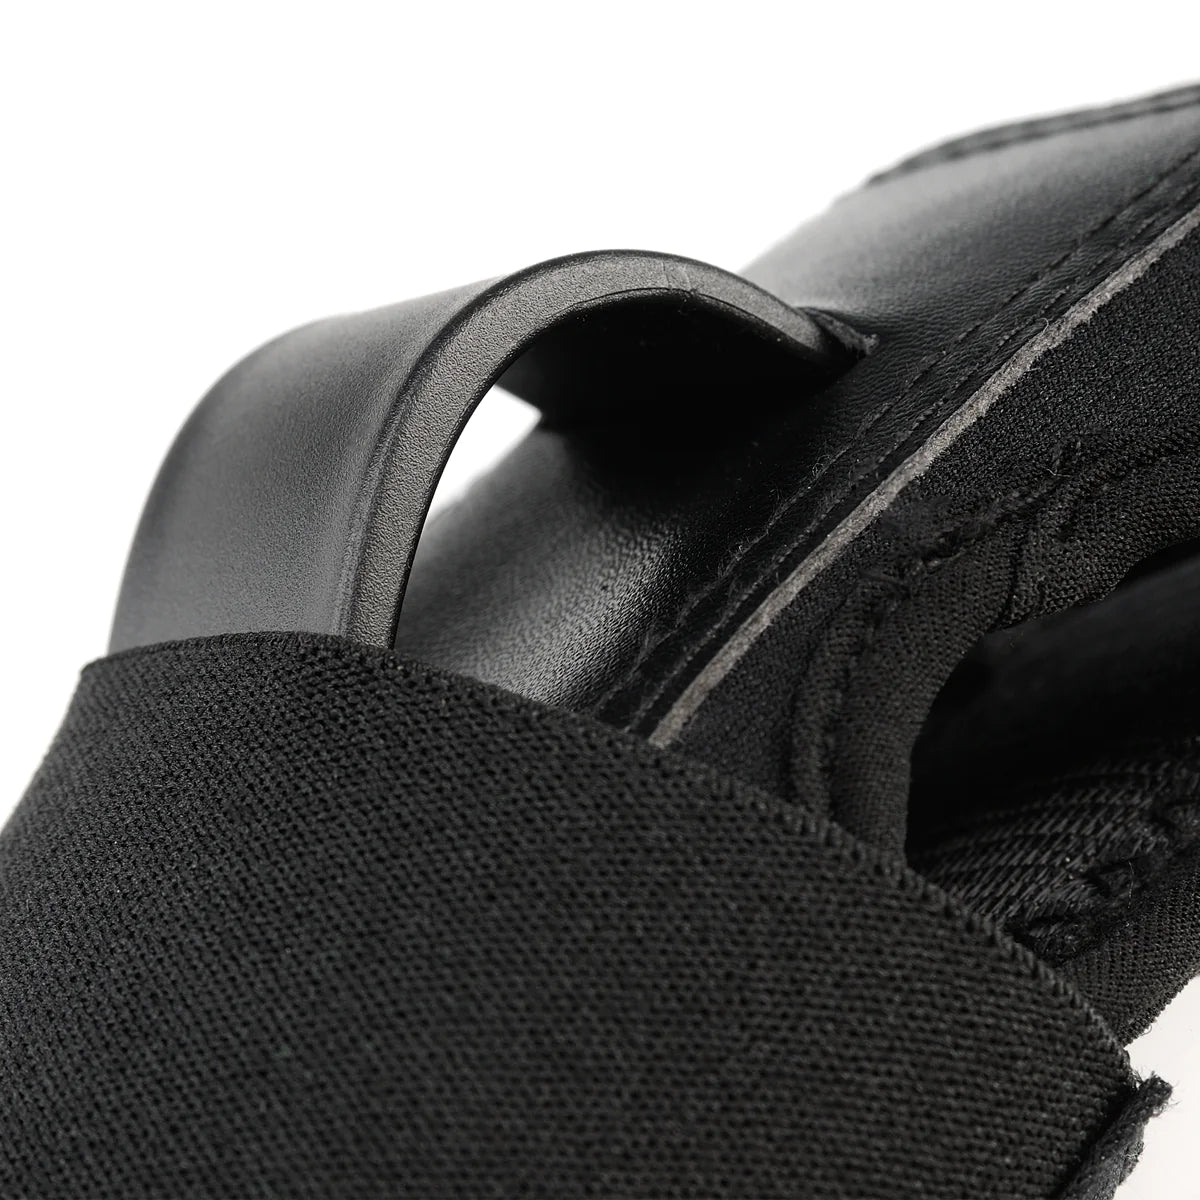 Protections de poignet Skateboard Bullet - Noir